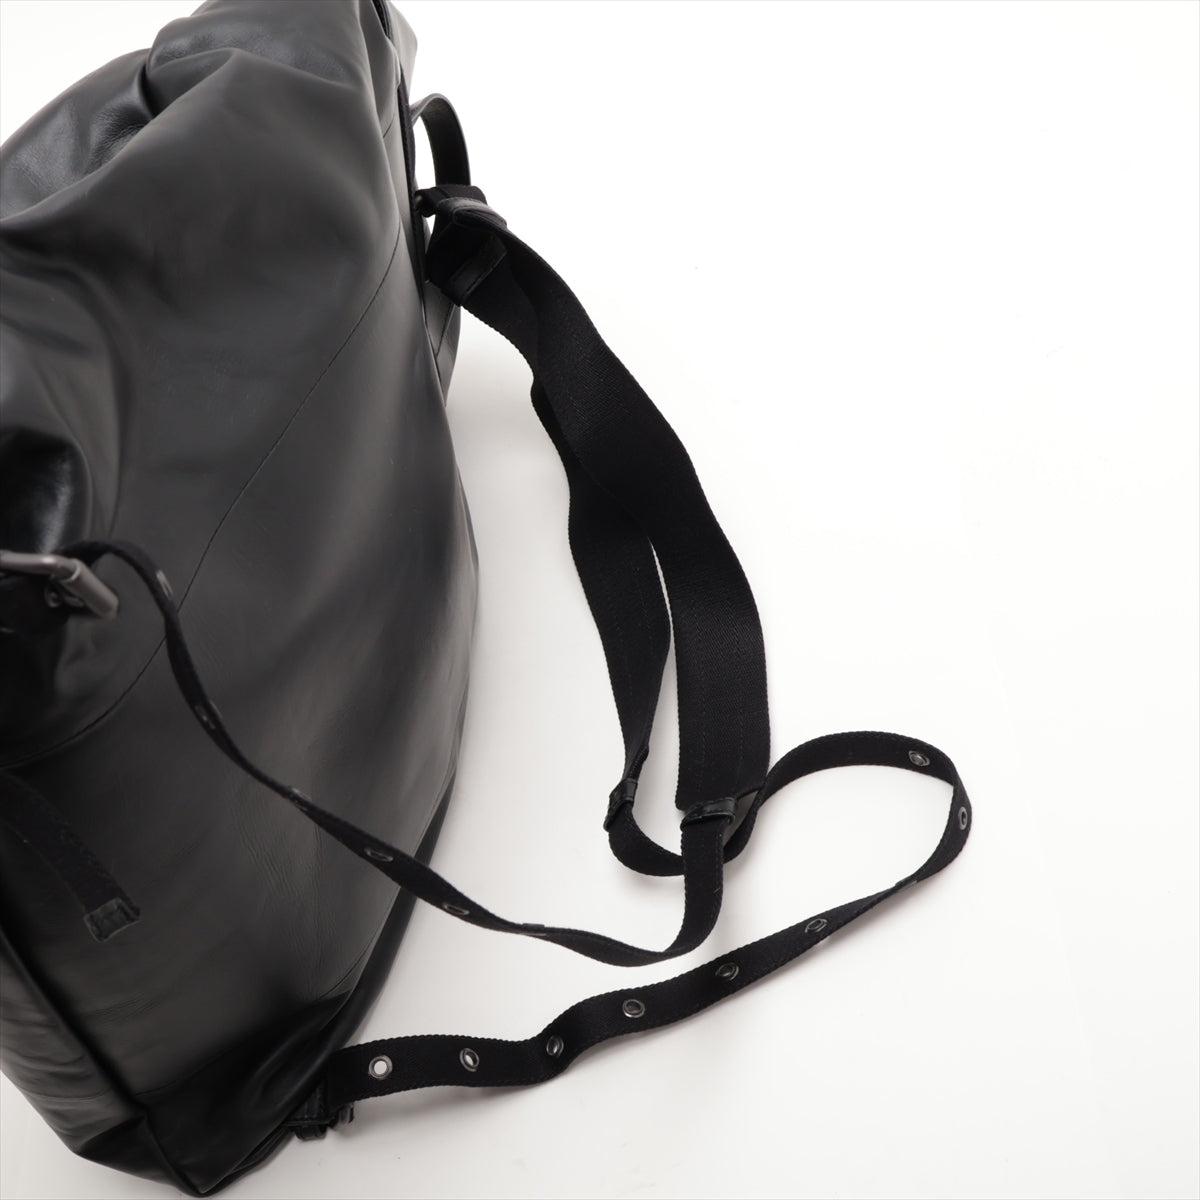 Bottega Veneta Intrecciato Leder Backpack/Rucksack Black Rucksack